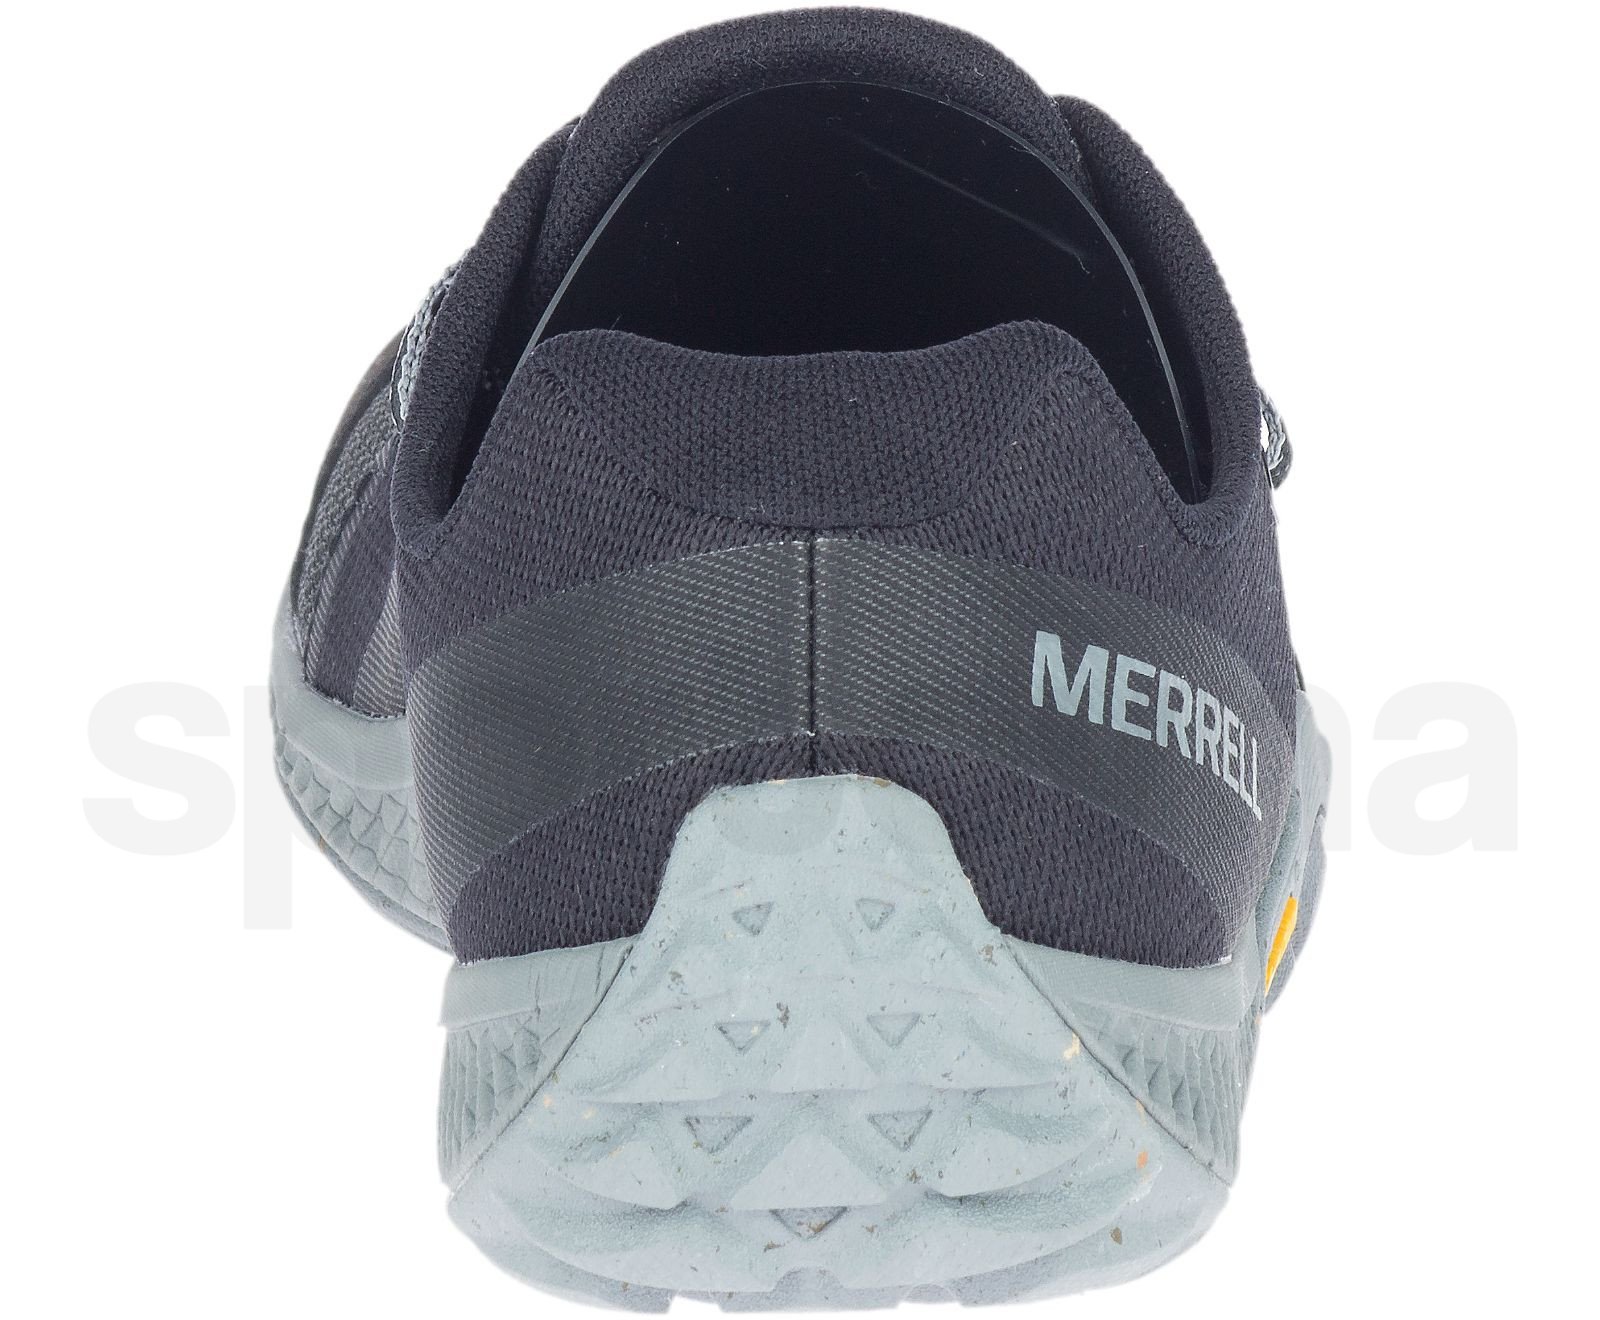 Obuv Merrell Trail Glove 6 M - černá